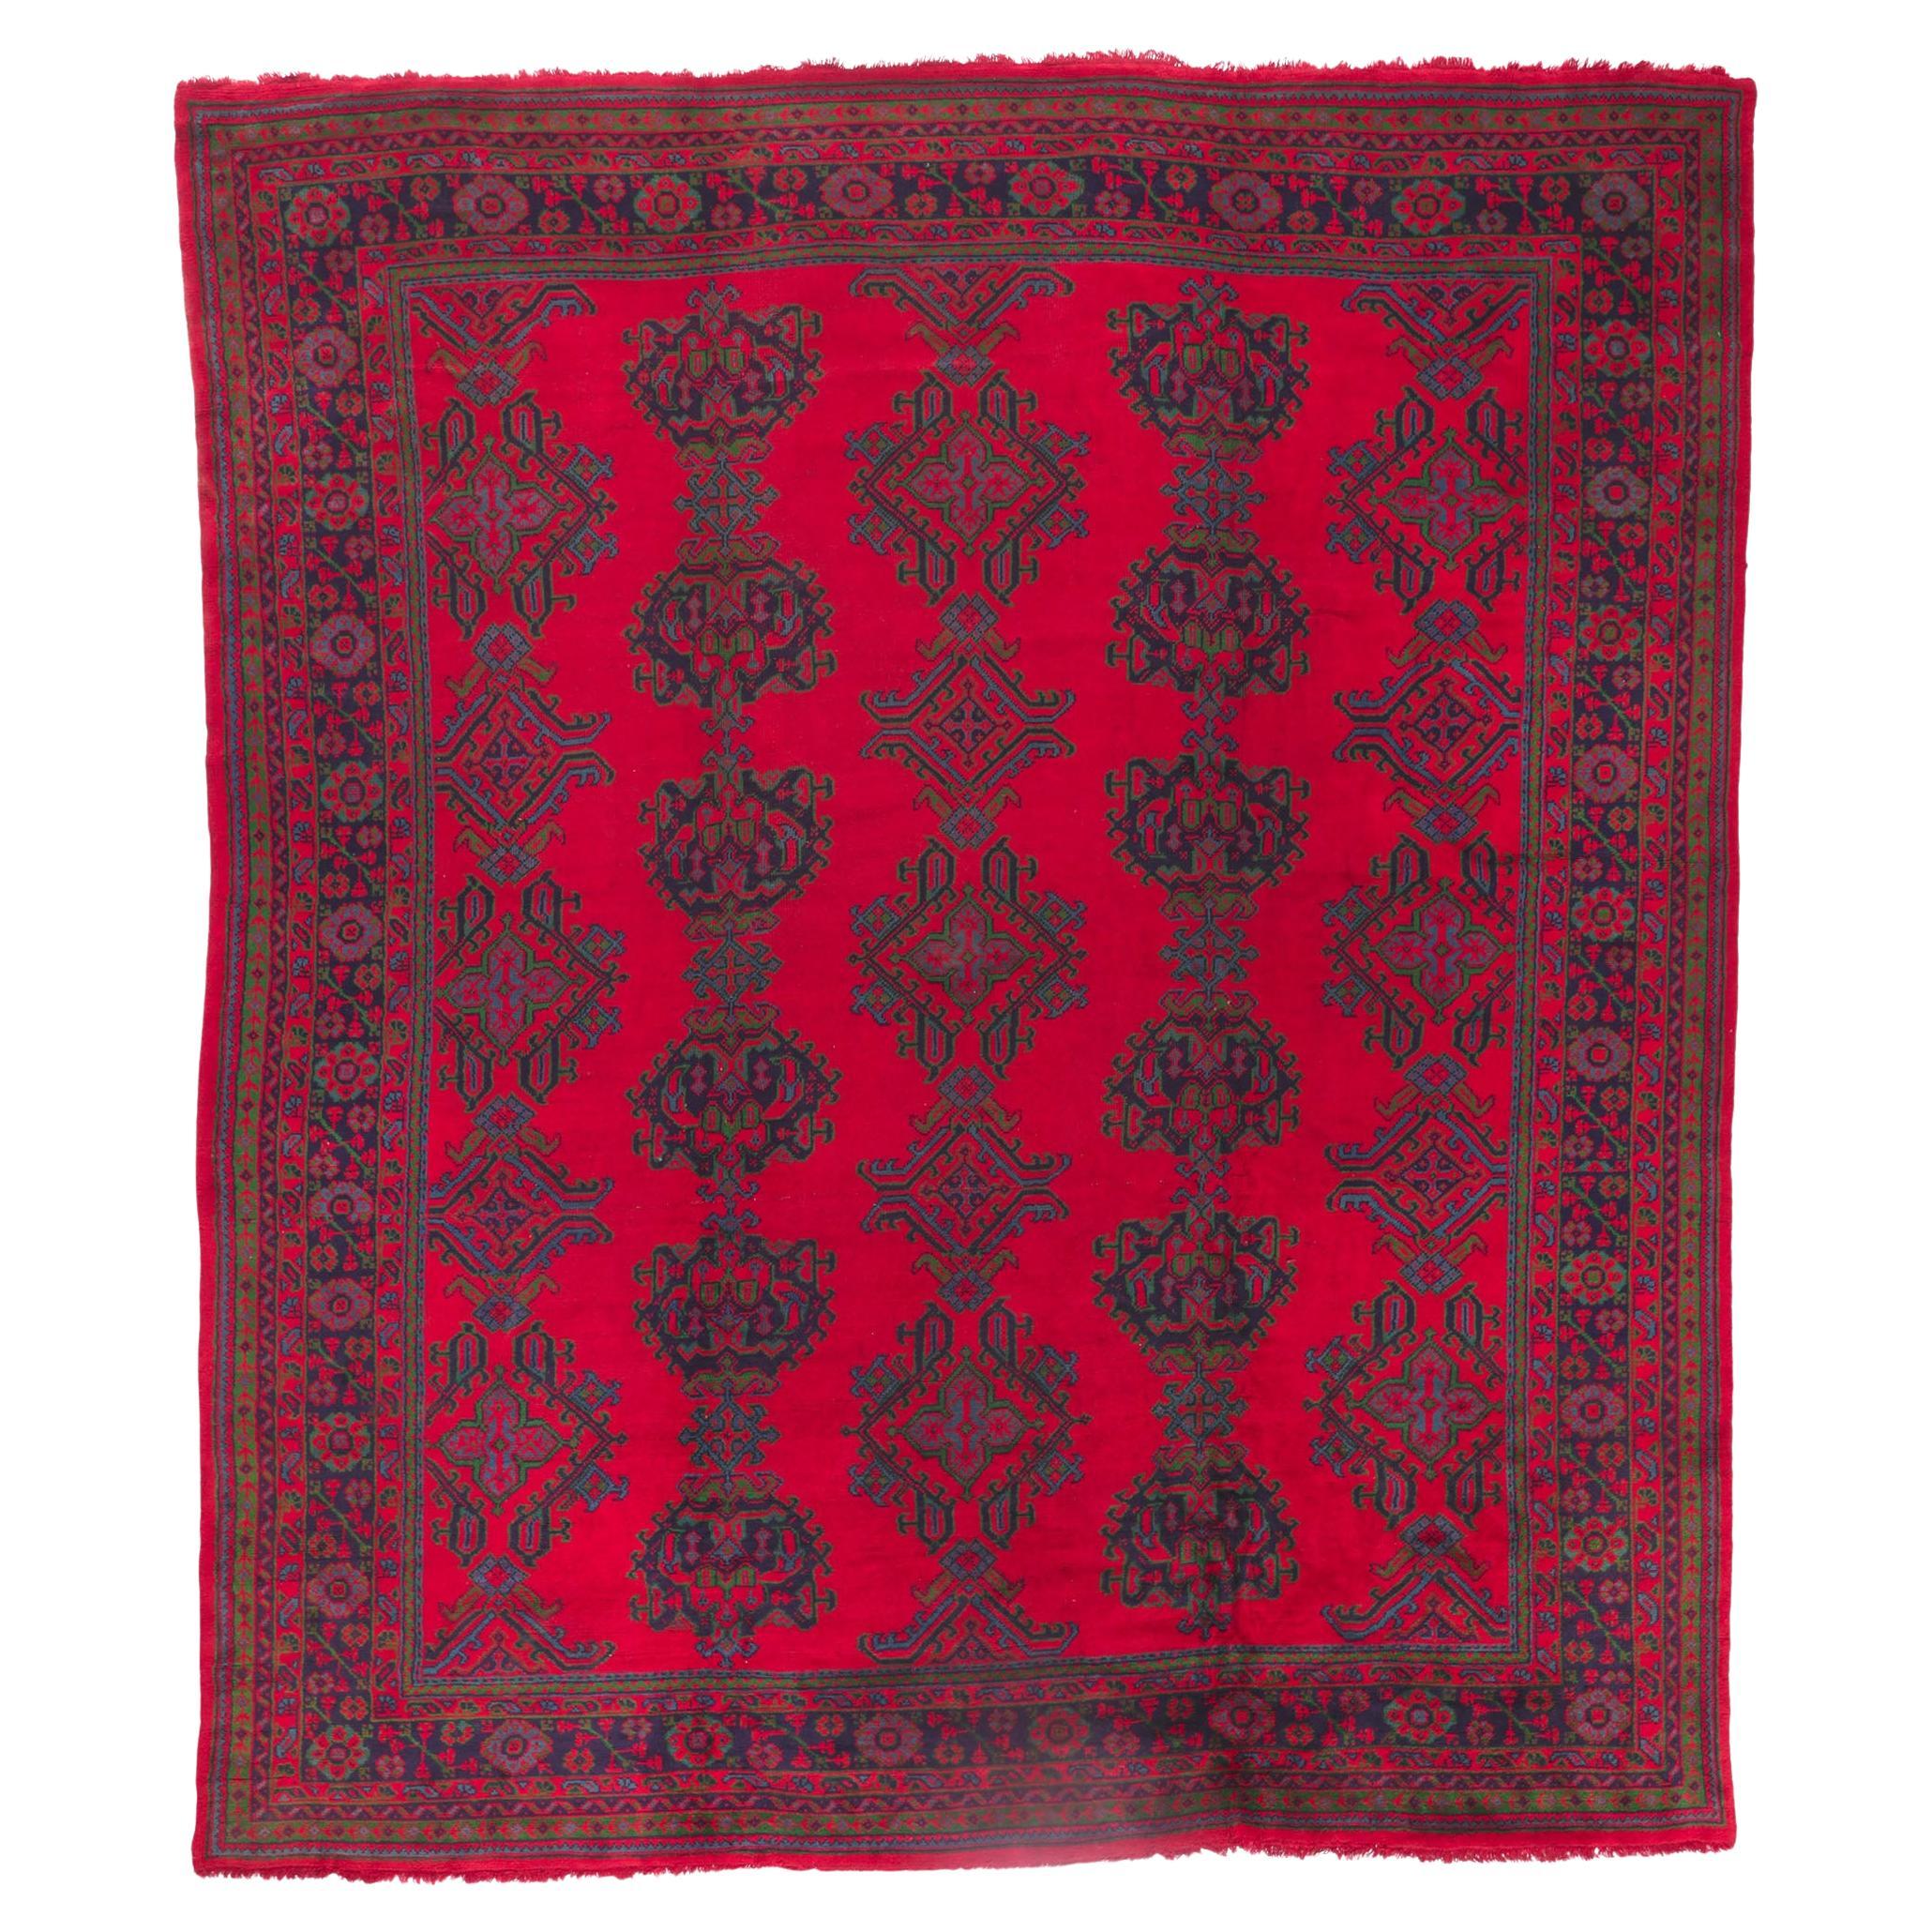 Antique Red Turkish Oushak Rug Inspired by Thomas Eakins